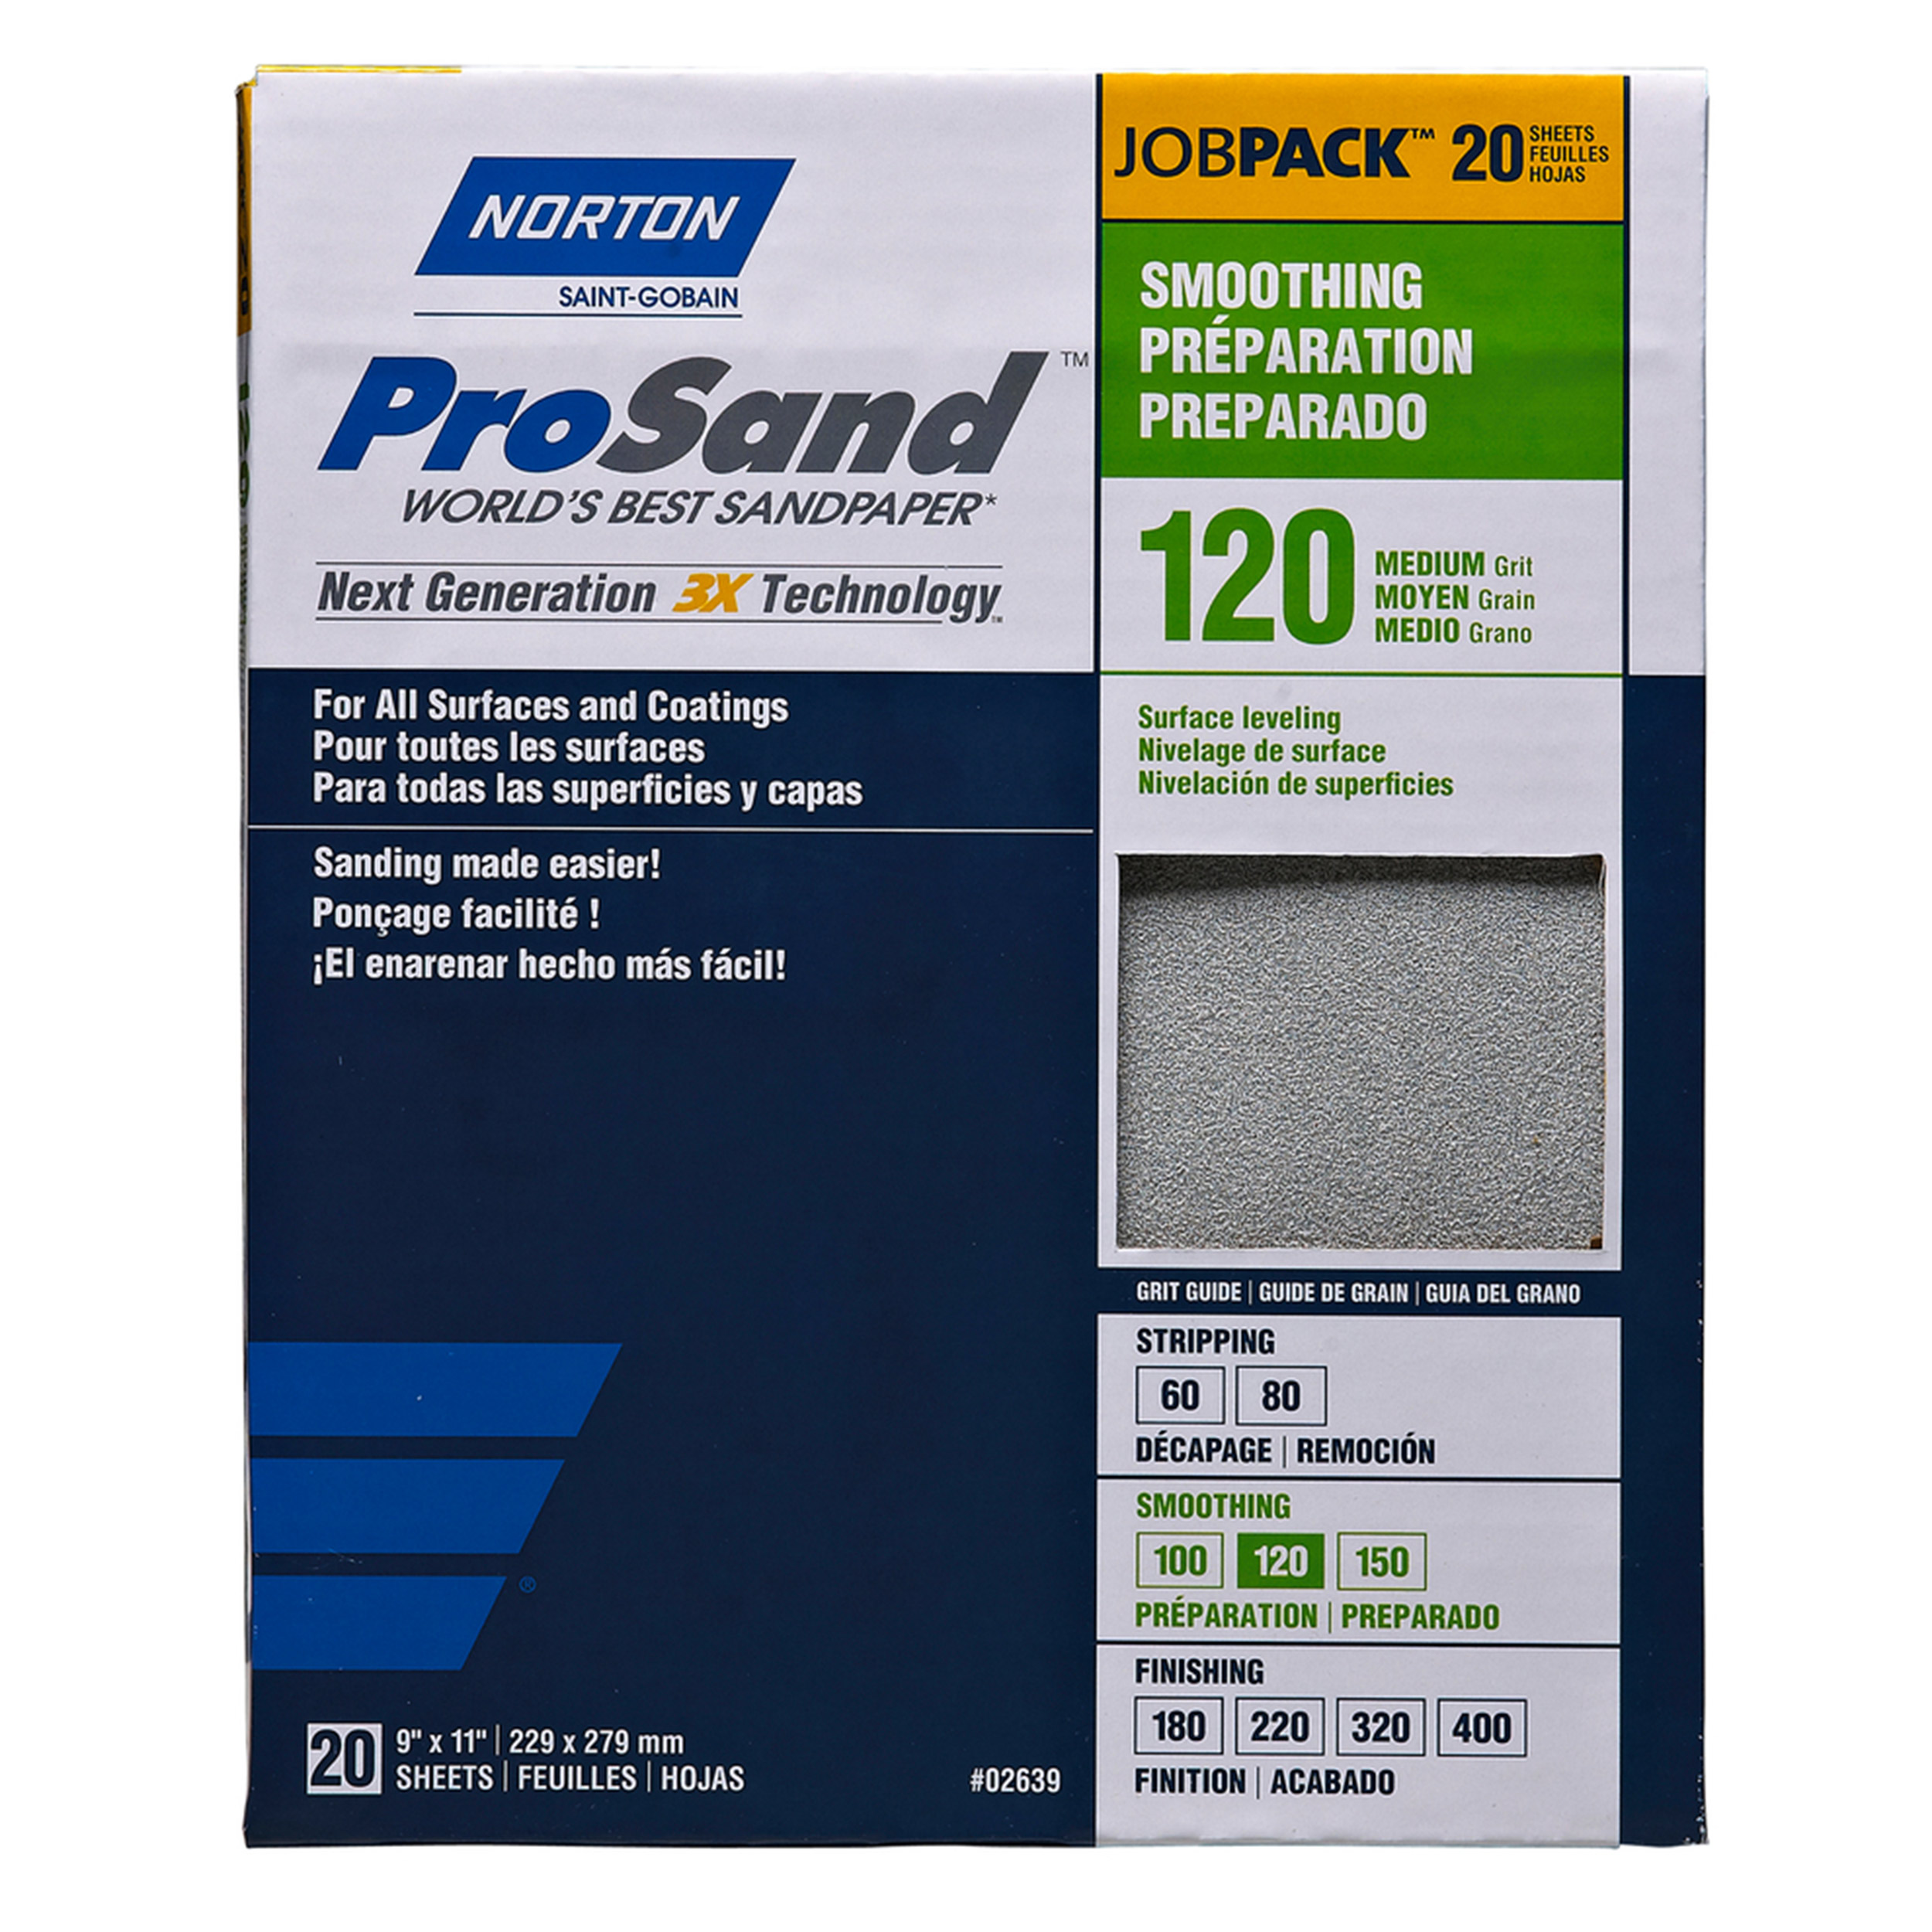 Norton Prosand 9" X 11" Sanding Sheets 120g 20pack